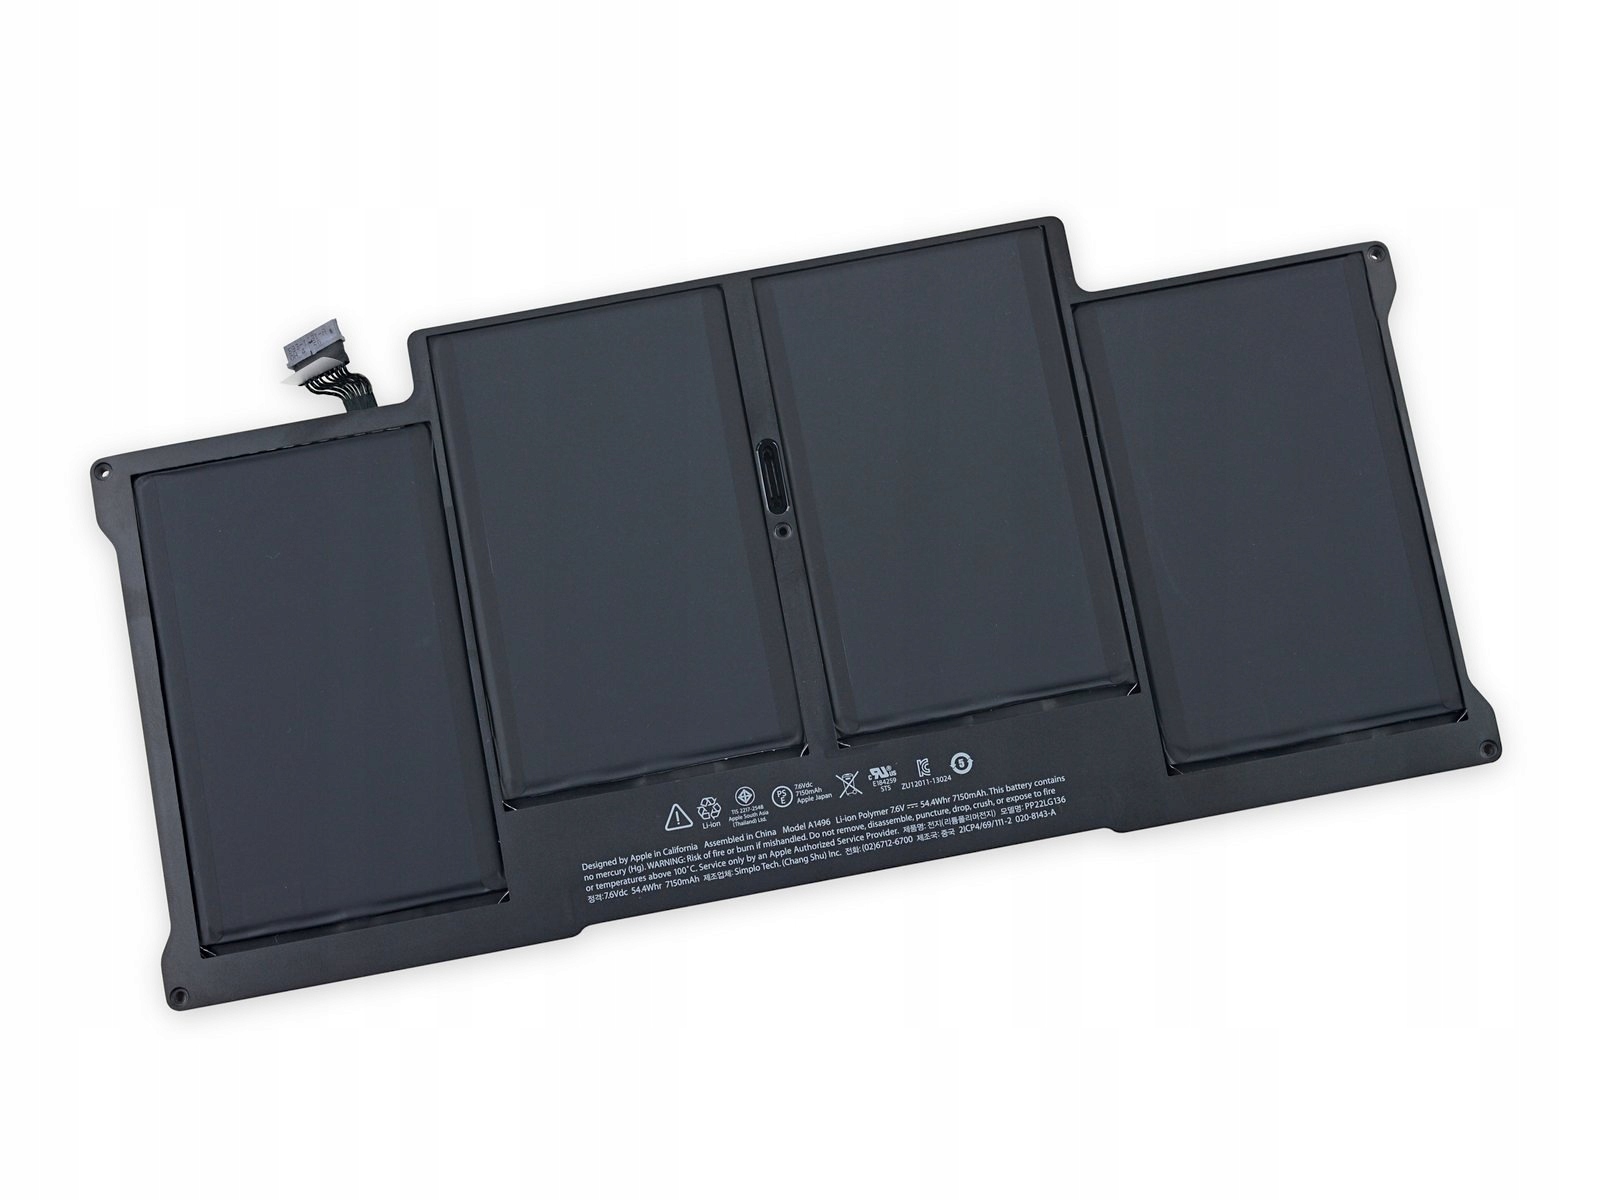 MacBook Air 13 A1466 Early 2015 MJVE2LL/A Battery 7.6V 54.4Whr